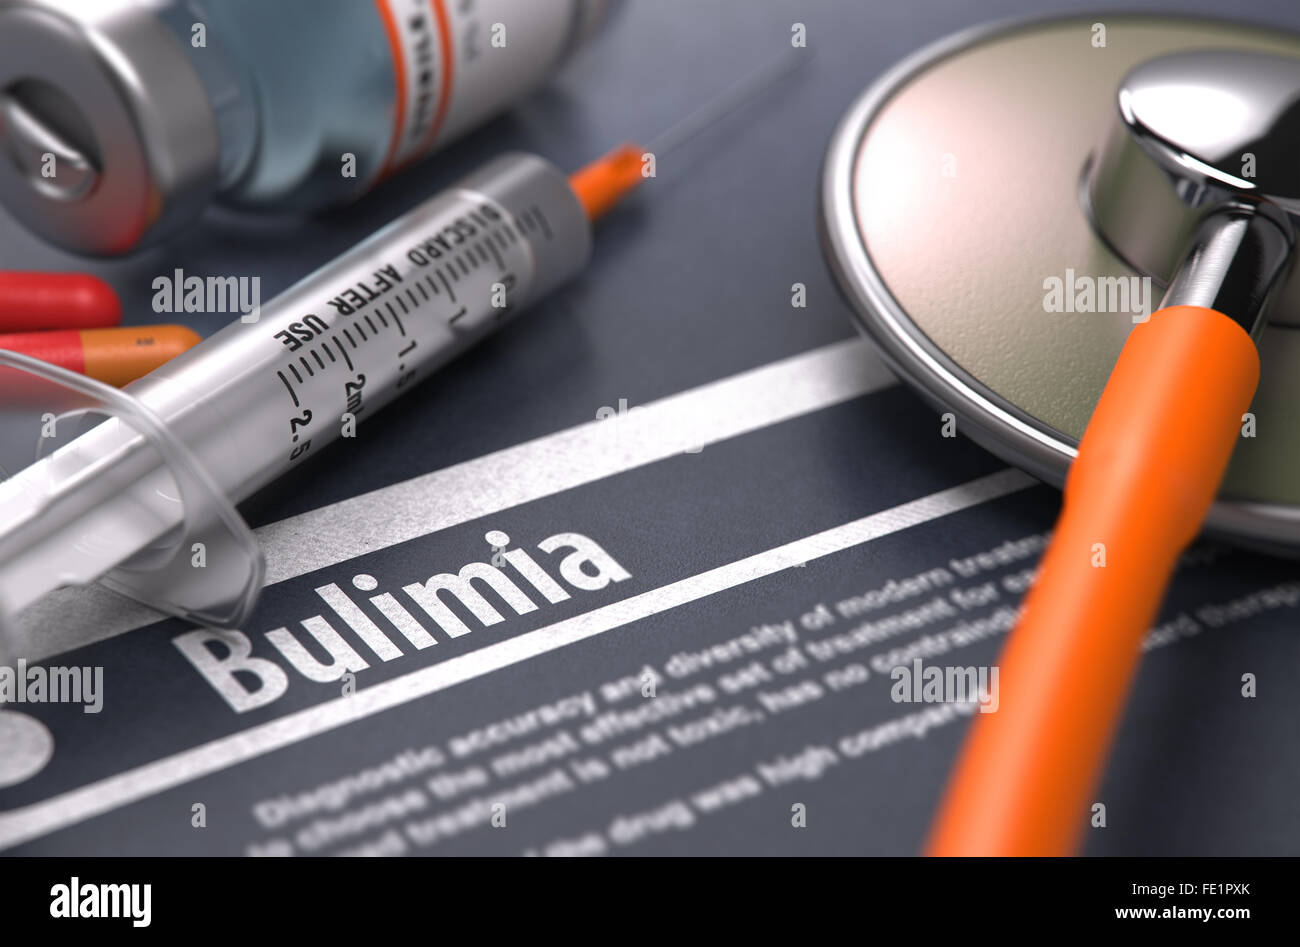 Bulimia - Printed Diagnosis on Grey Background. Stock Photo